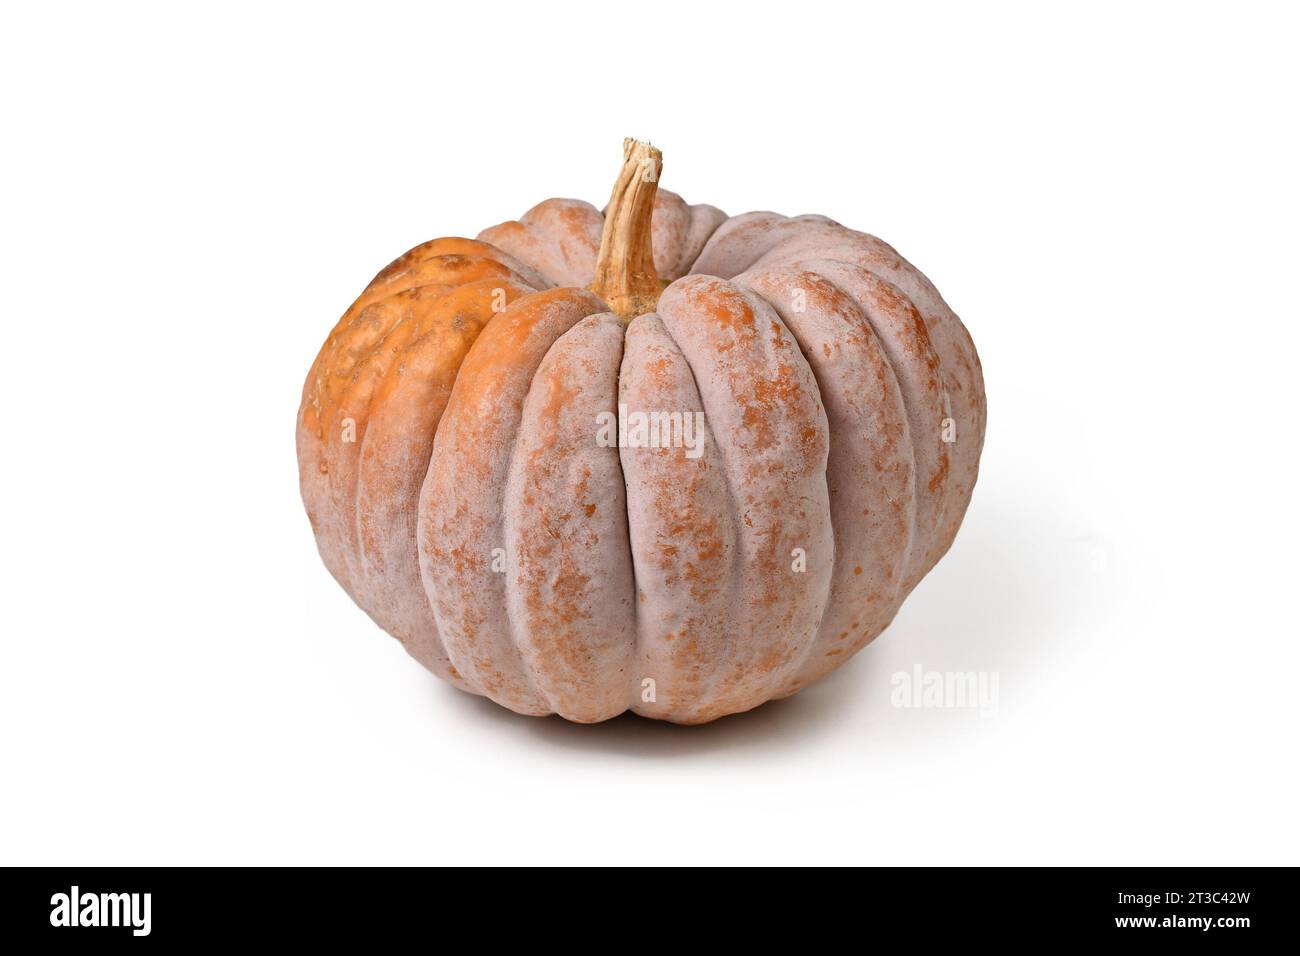 'Black Futsu' pumpkin squash with grey and orange skin on white background Stock Photo